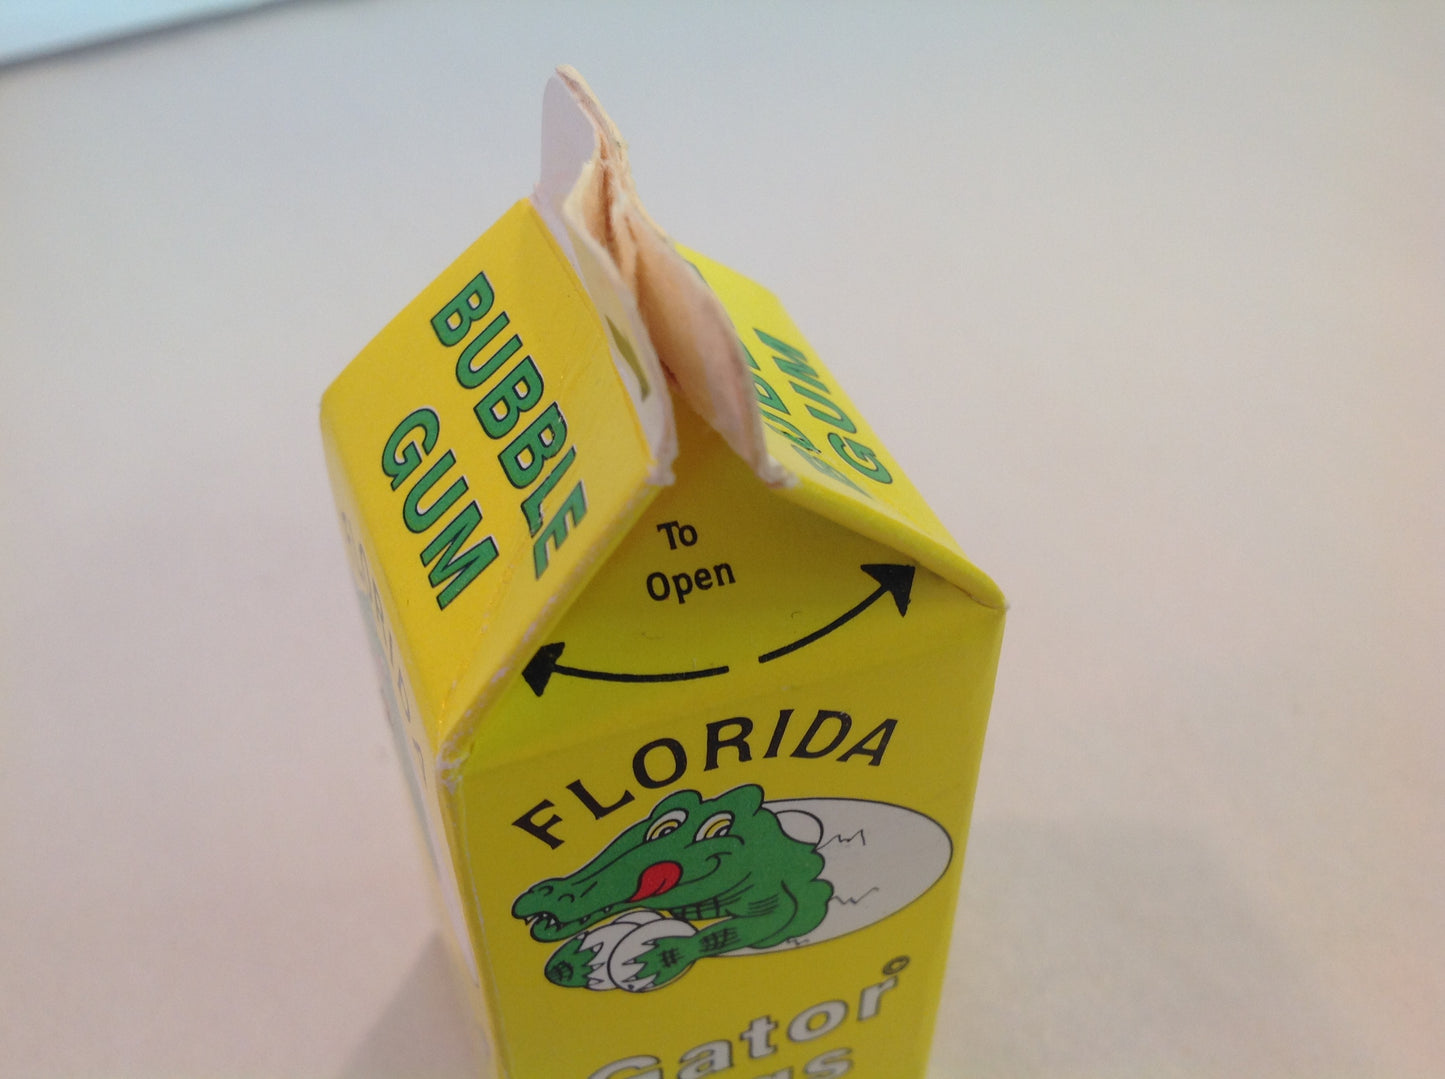 Vintage 1980's Lenny's Florida Gator Eggs Bubble Gum Novelty Milk Carton Candy Container